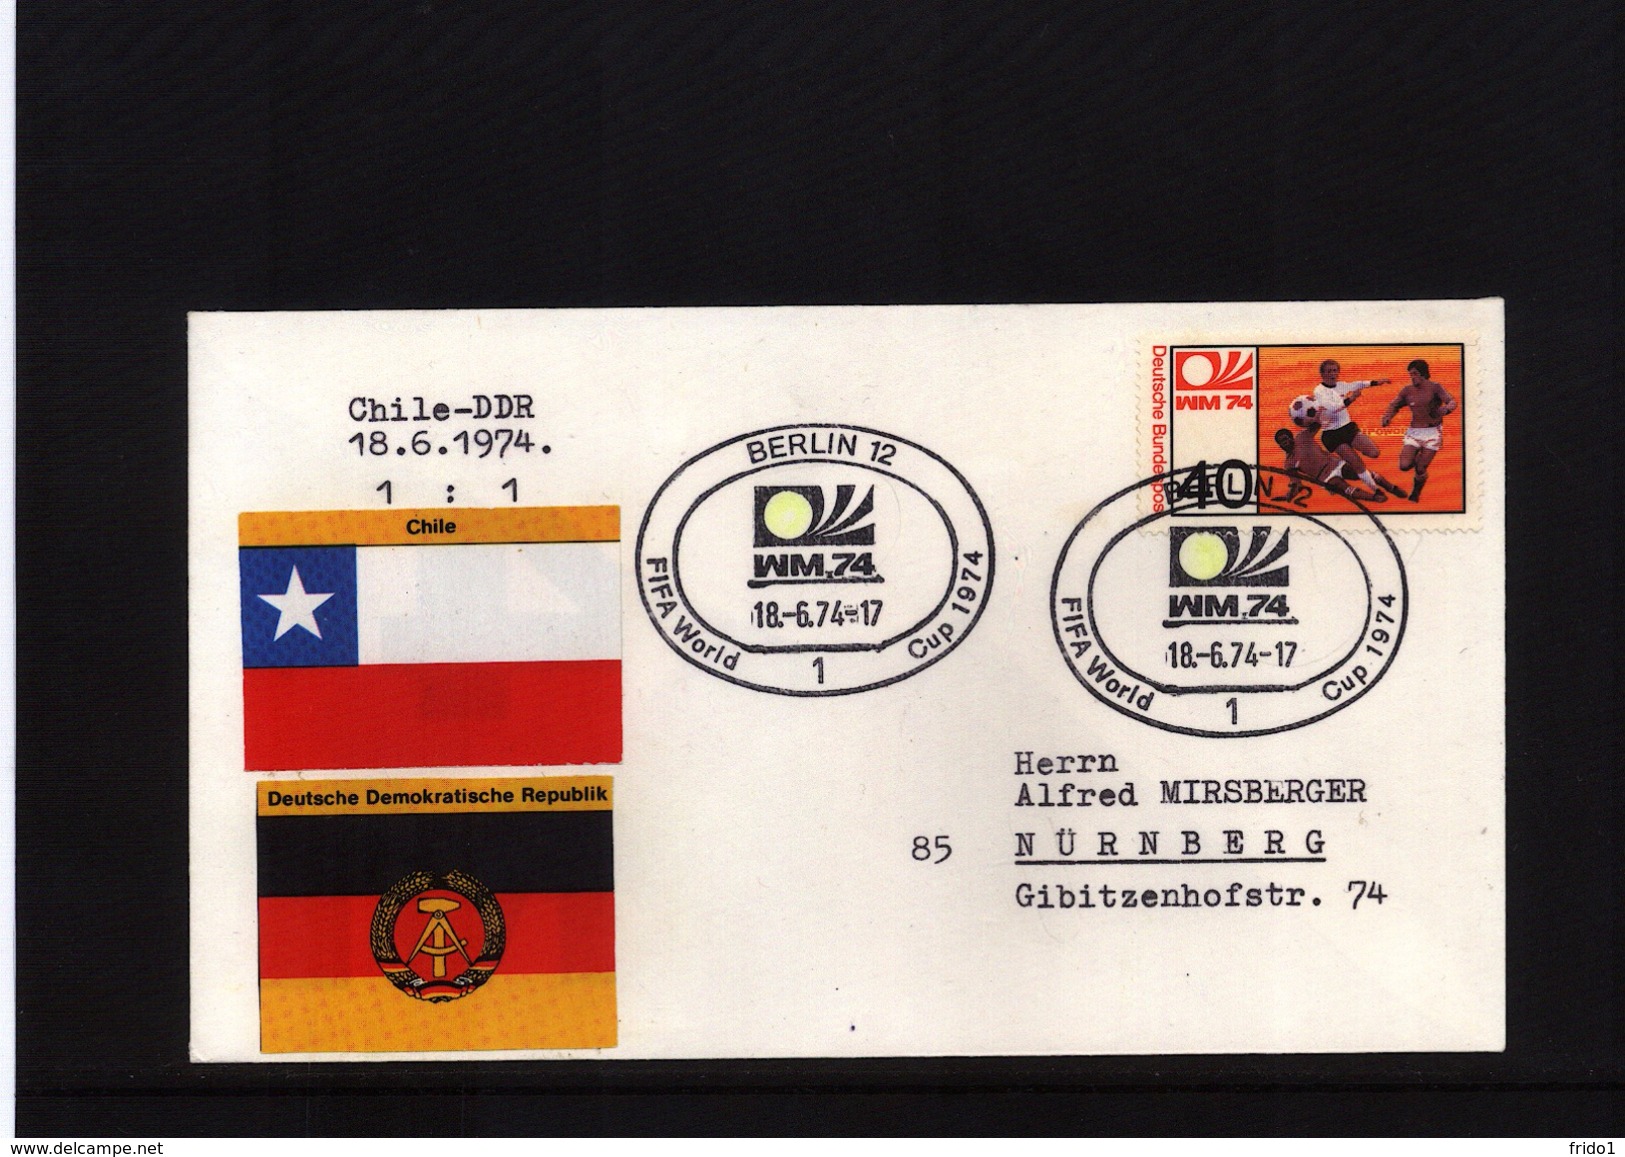 Deutschland / Germany 1974 World Football Champioship Germany-football Game Chile-DDR - 1974 – West Germany